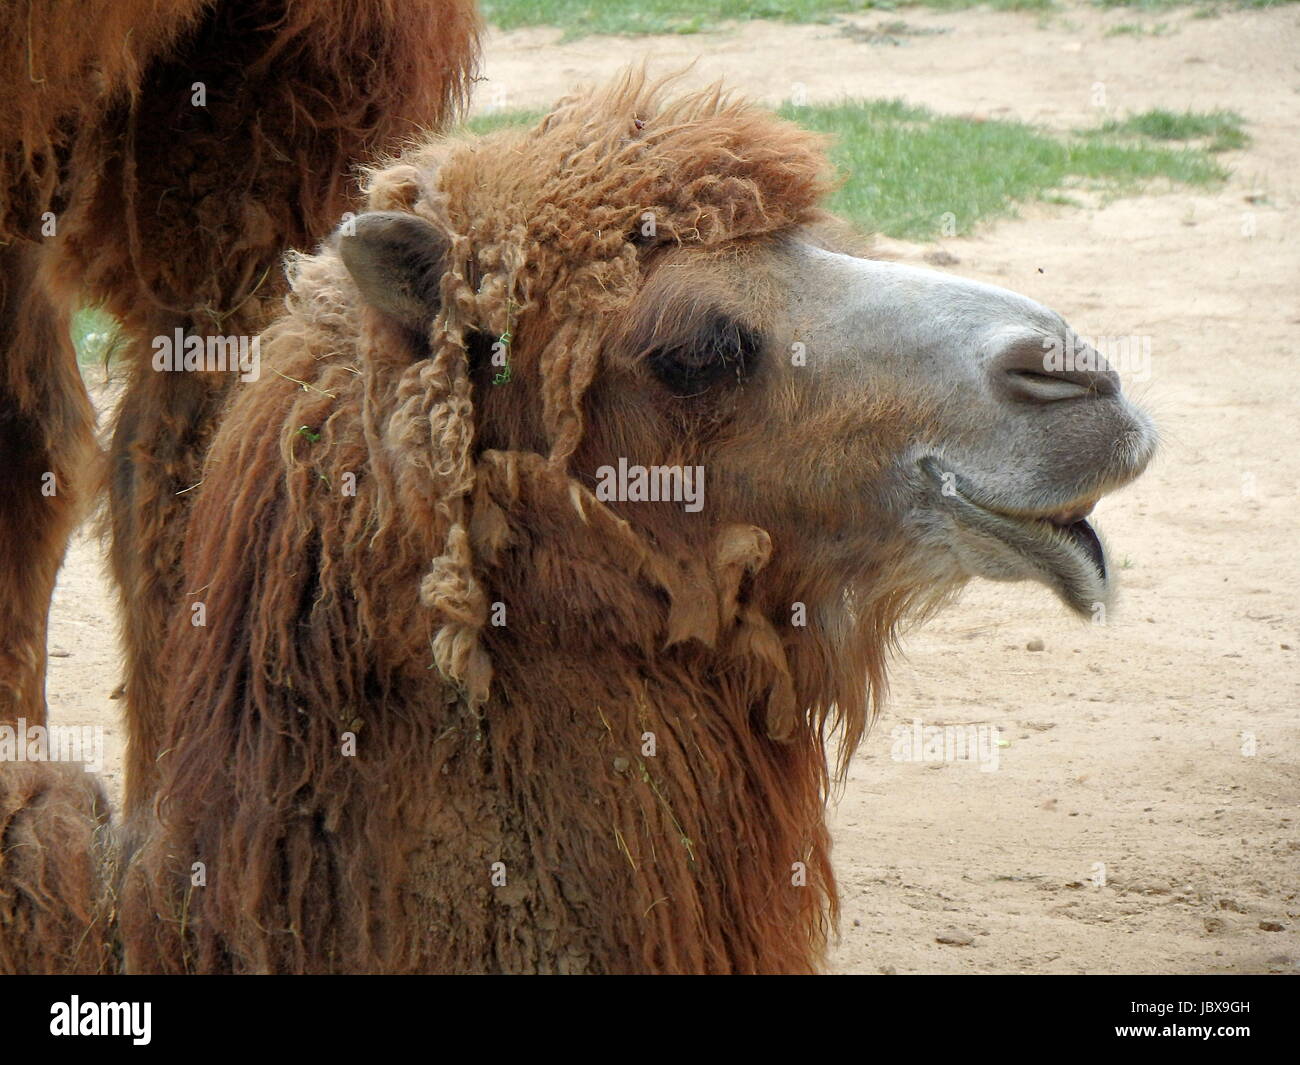 Bactrian camel - Wikipedia